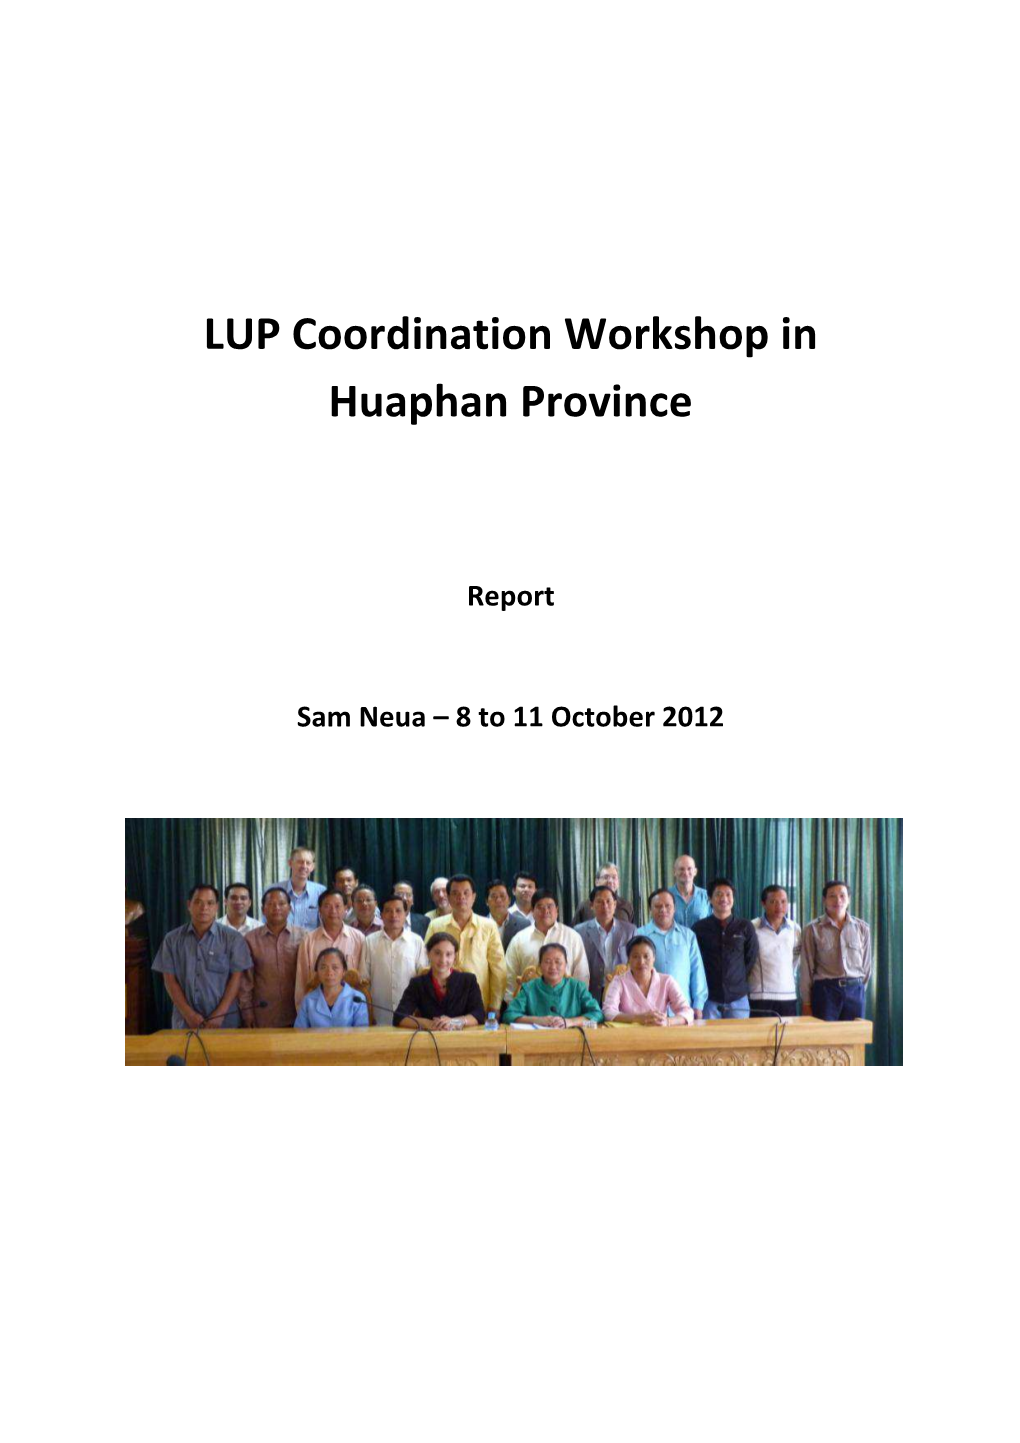 LUP Coordination Workshop in Huaphan Province